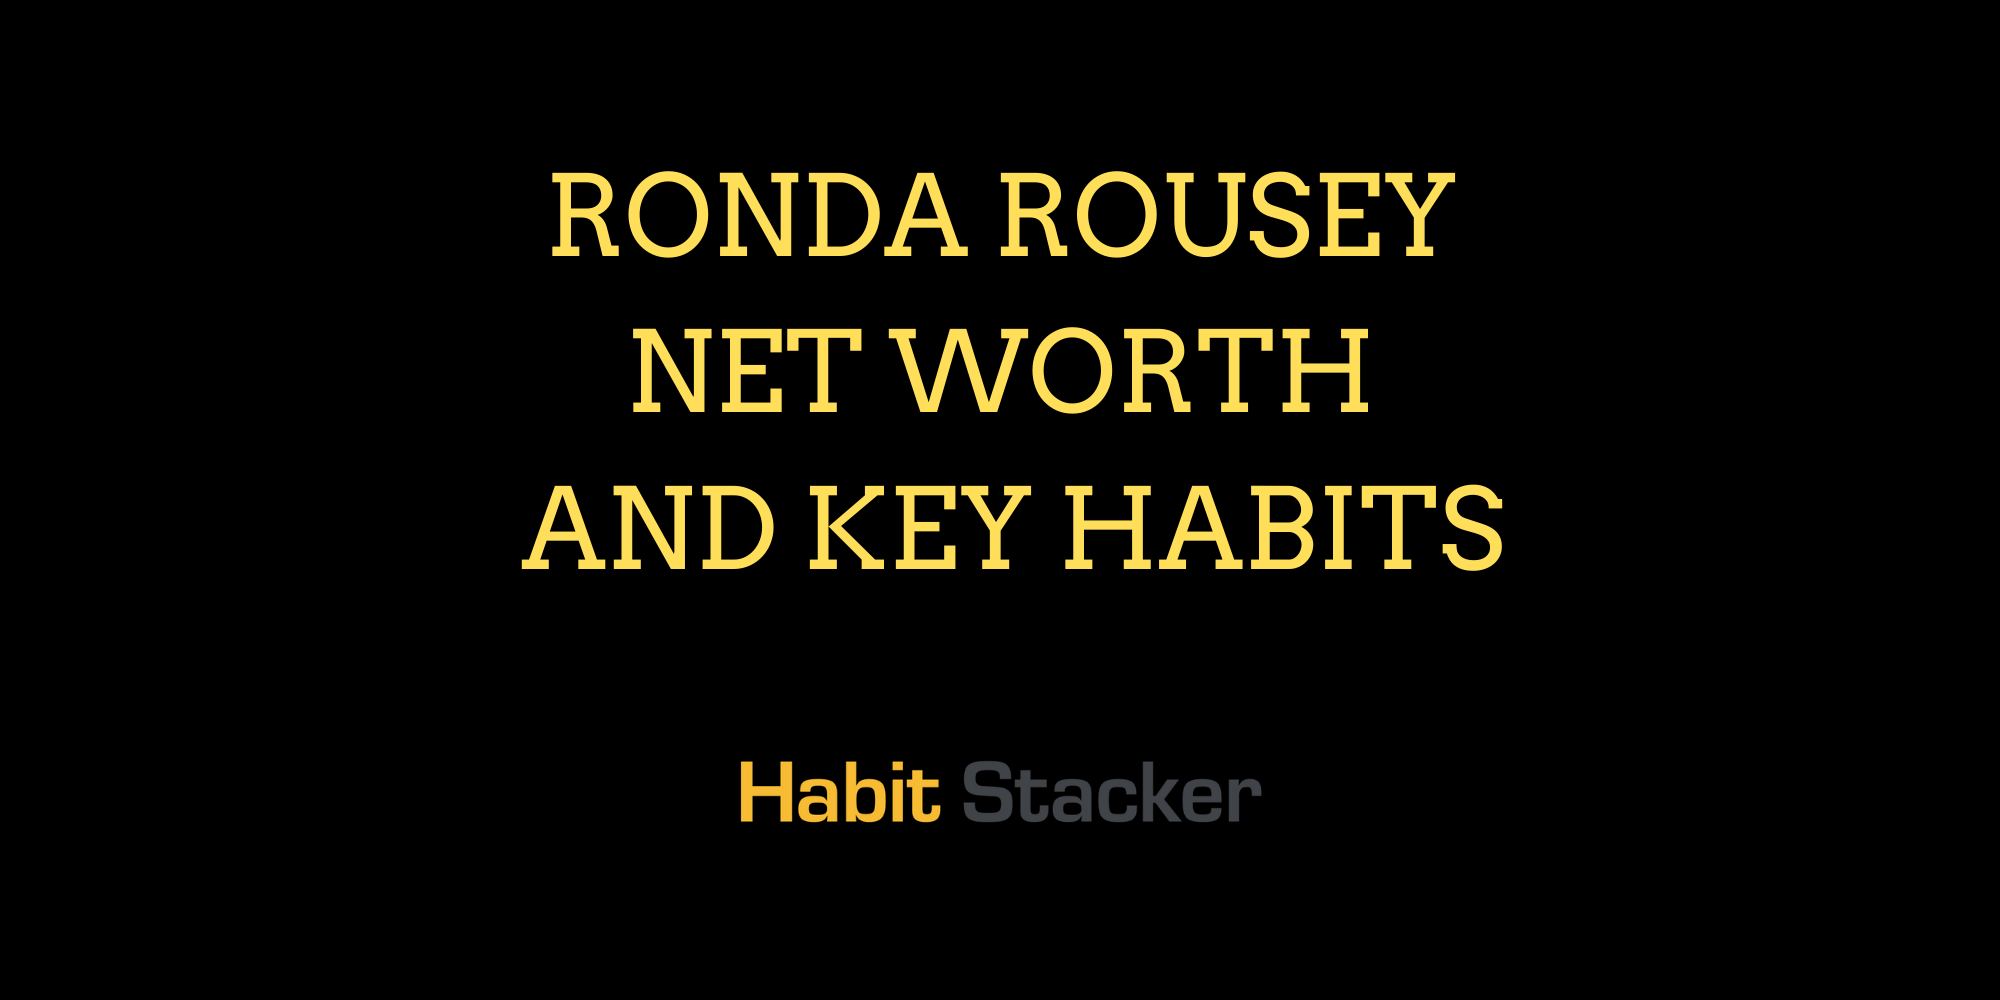 Ronda Rousey Net Worth and Key Habits